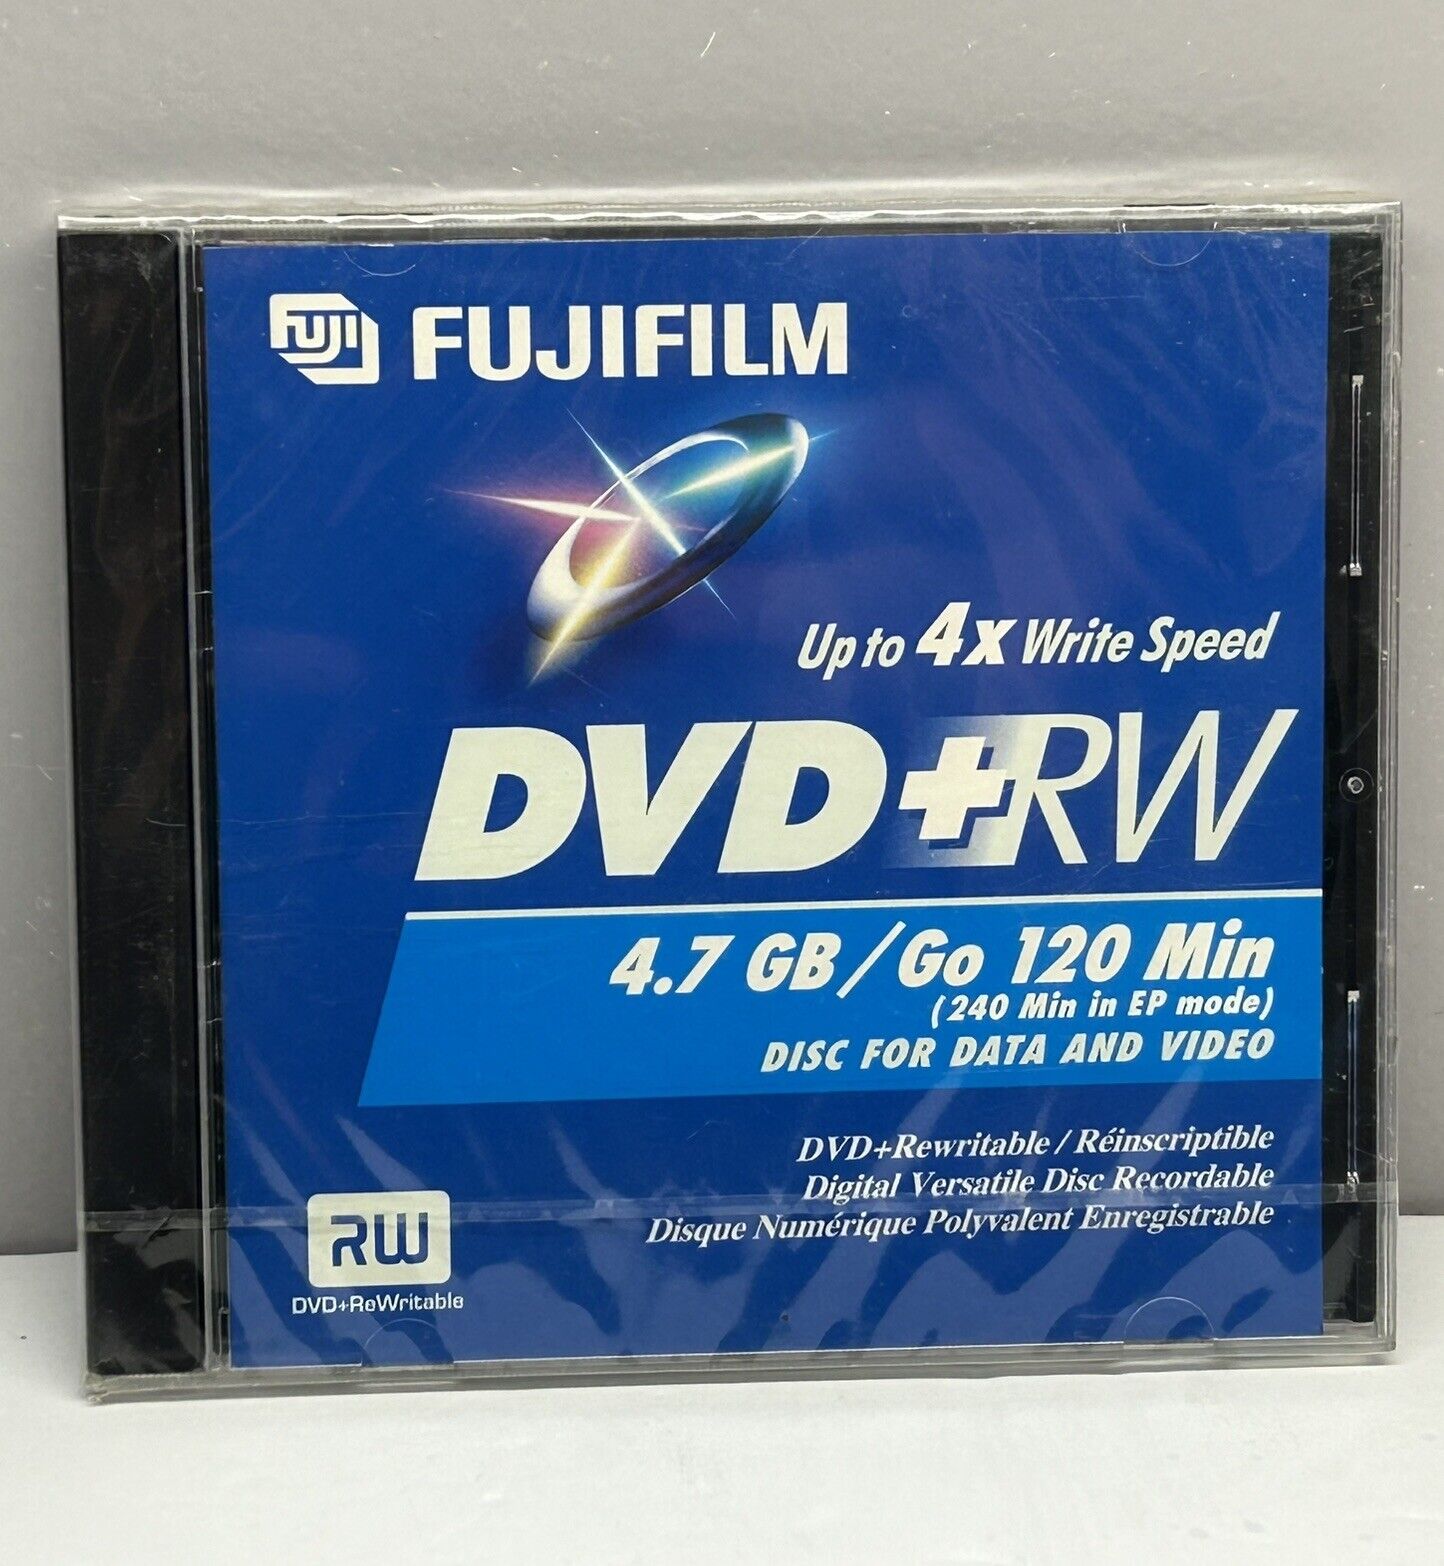 NEW & SEALED FujiFilm DVD+RW 4.7GB 4X Write Speed Rewritable Disc Ships FAST